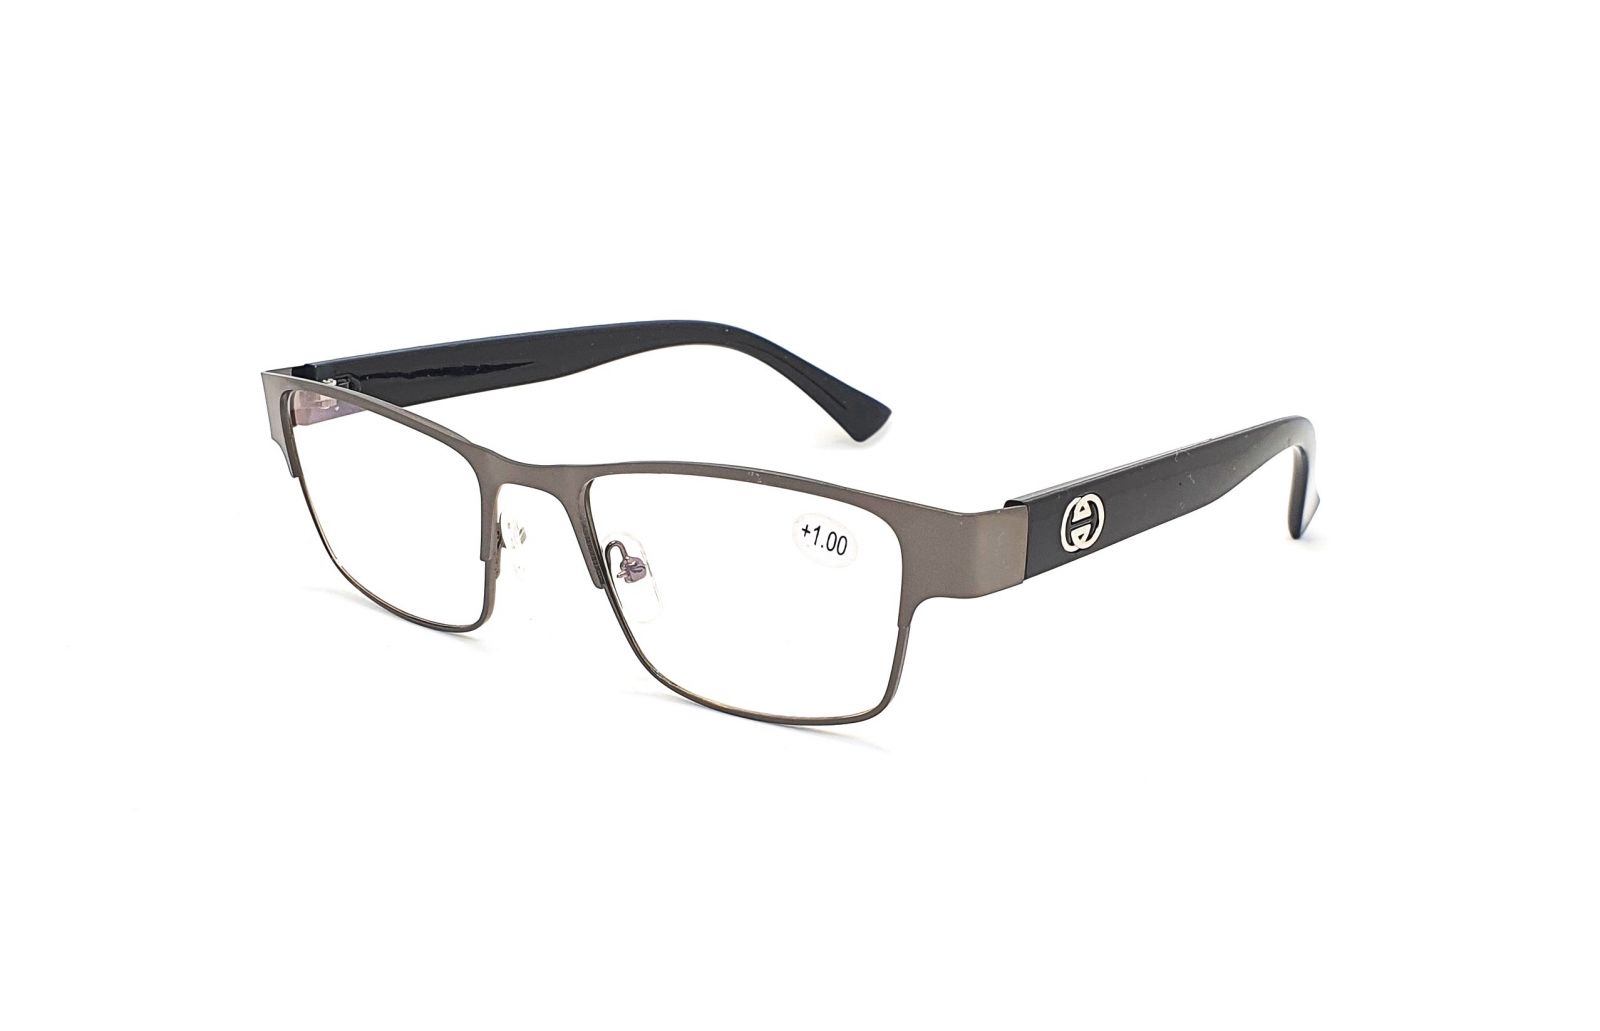 Dioptrické brýle OK231 +1,00 gray/black s antireflexní vrstvou